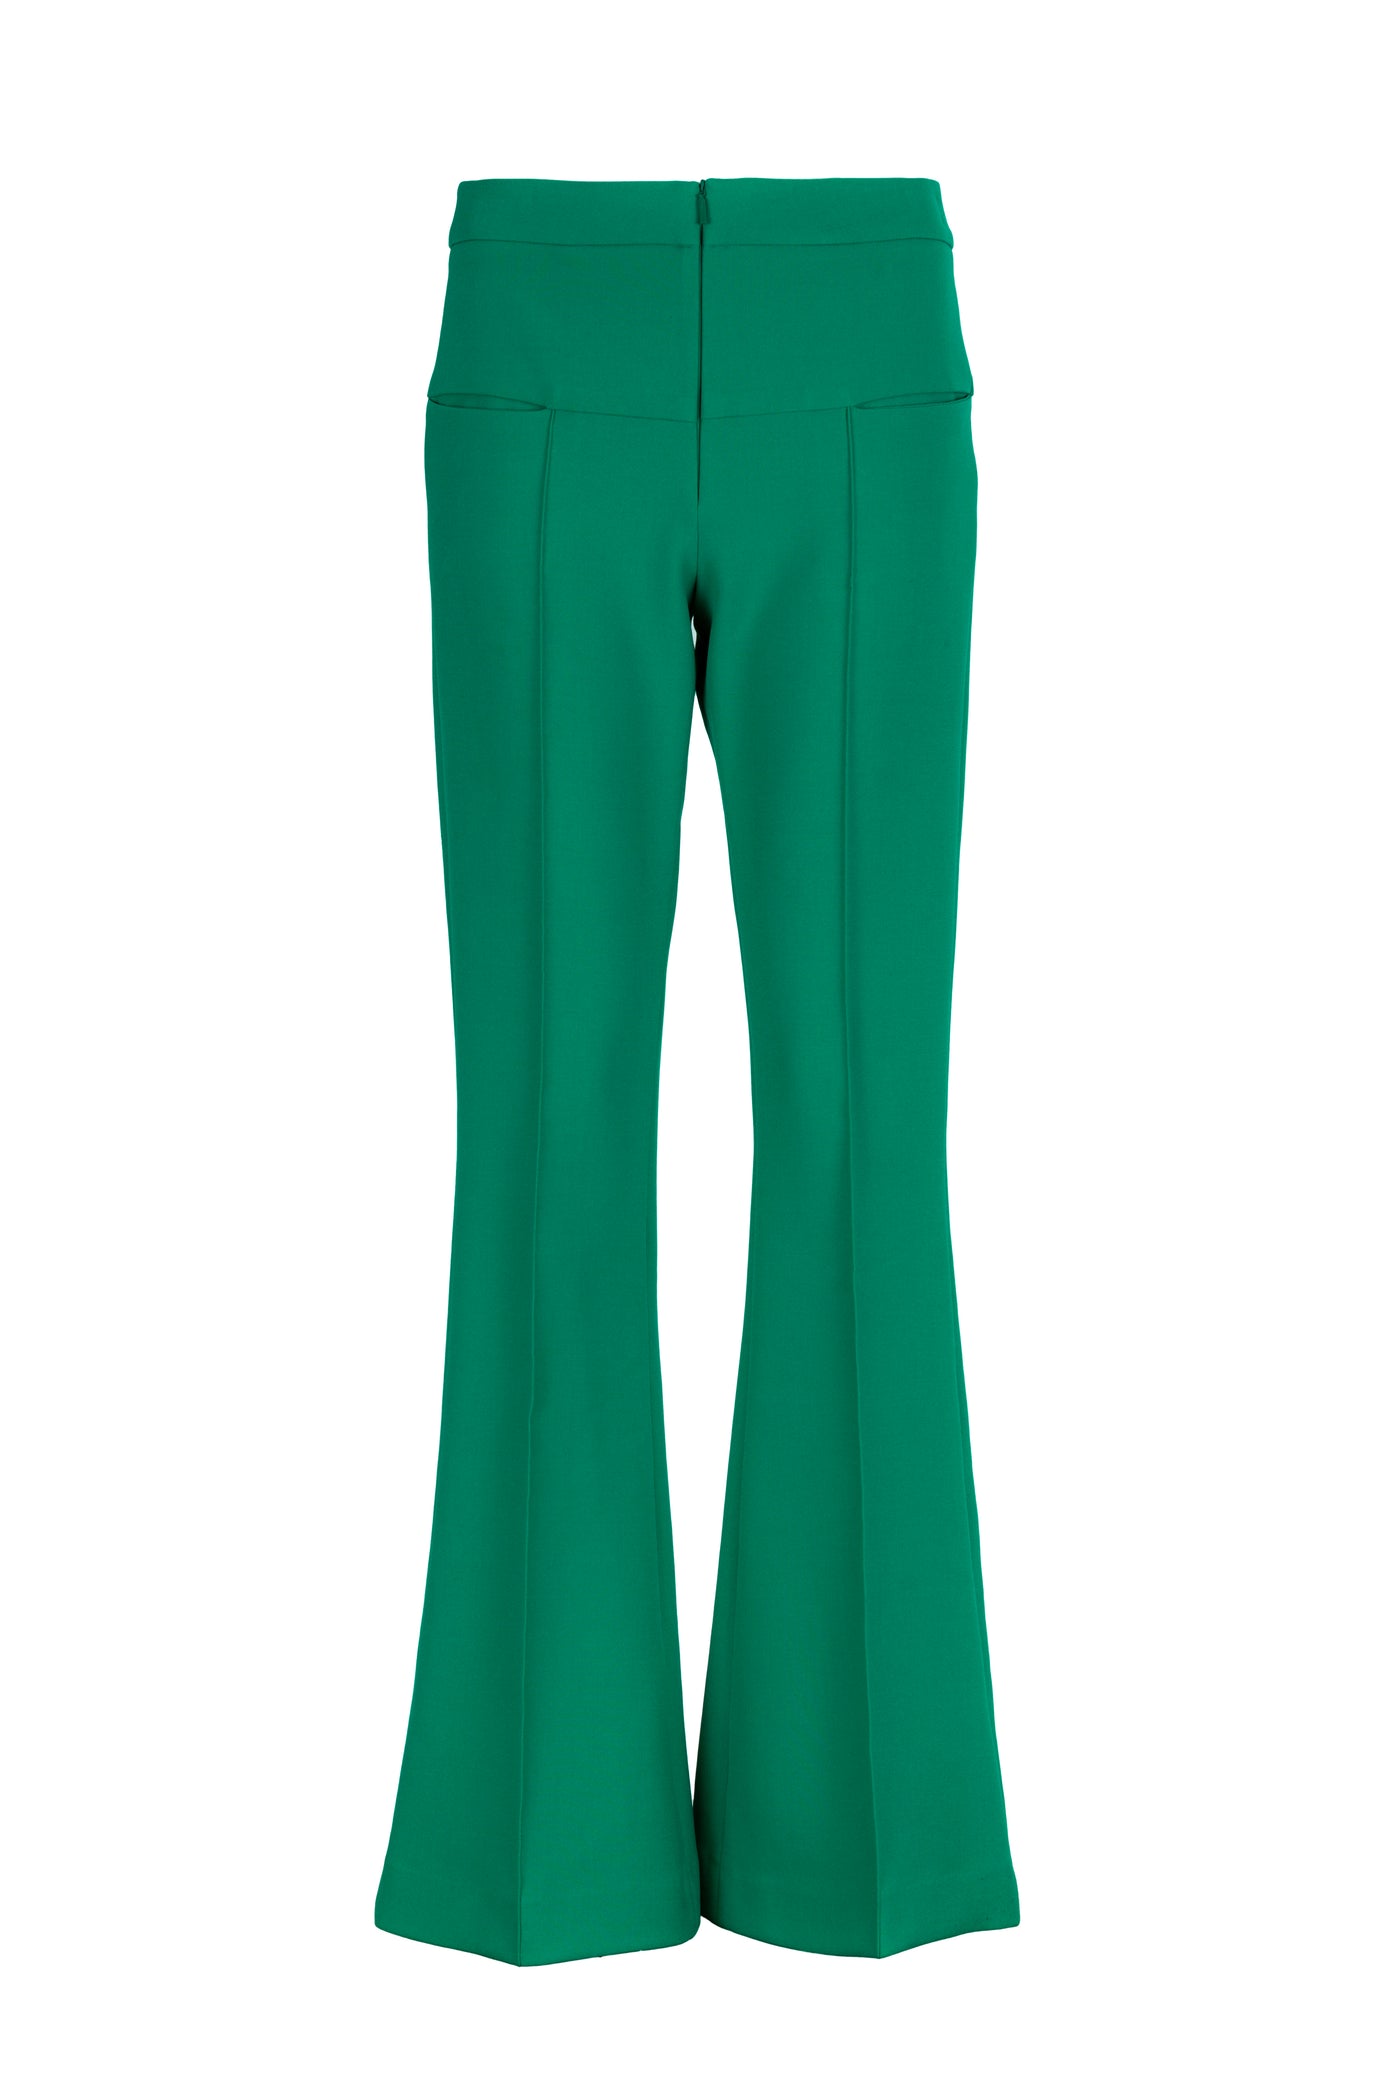 Green Bell Pants